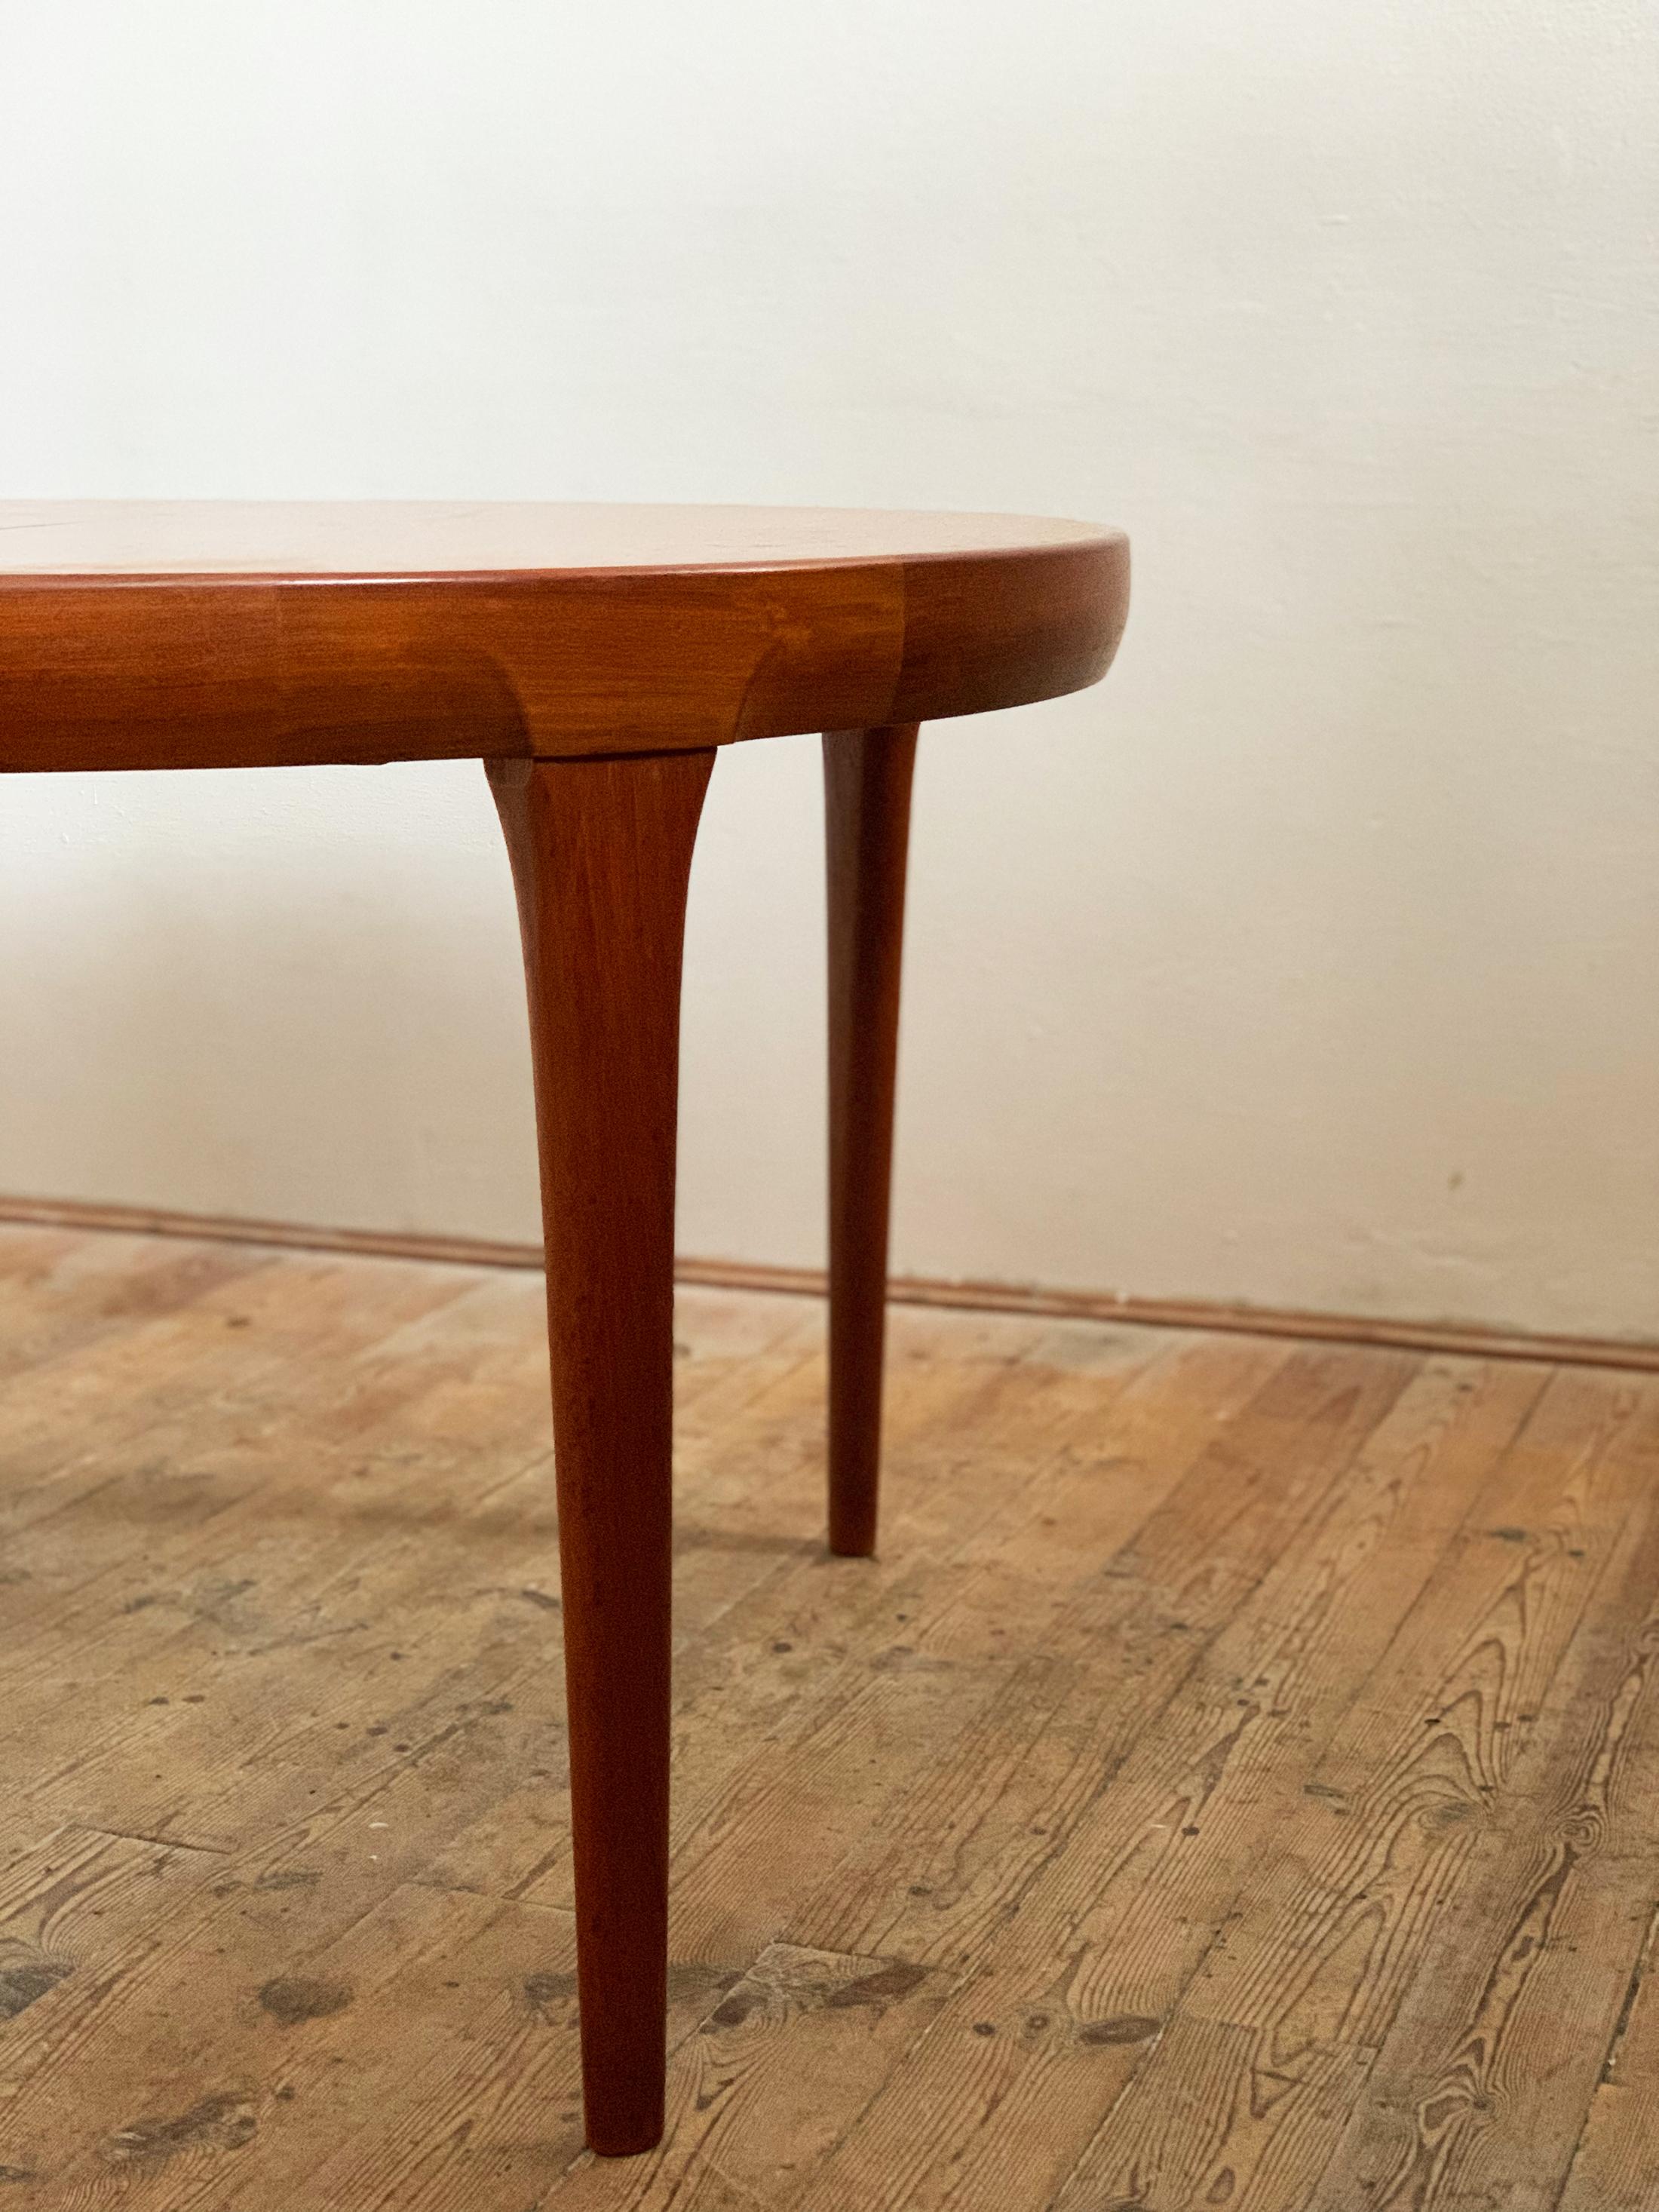 Danish Mid-Century Modern Extendable Teak Dining Table by Ib Kofod-Larsen, 1960s For Sale 3